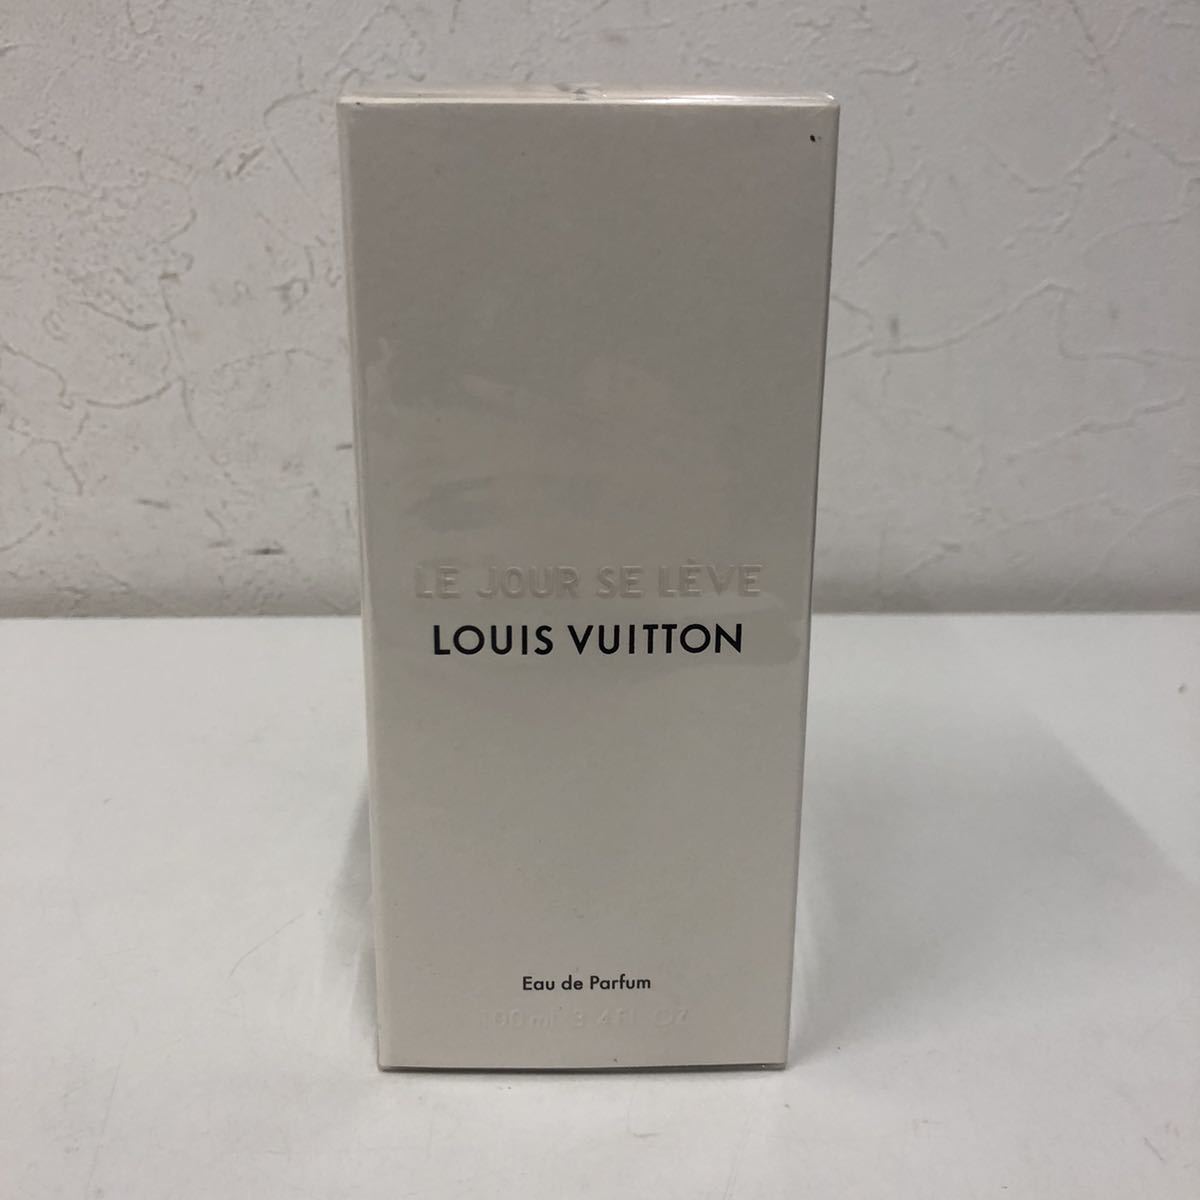 LOUIS VUITTON ルイヴィトン香水 ルジュール・スレーヴ オードゥパルファン100ml フランス製